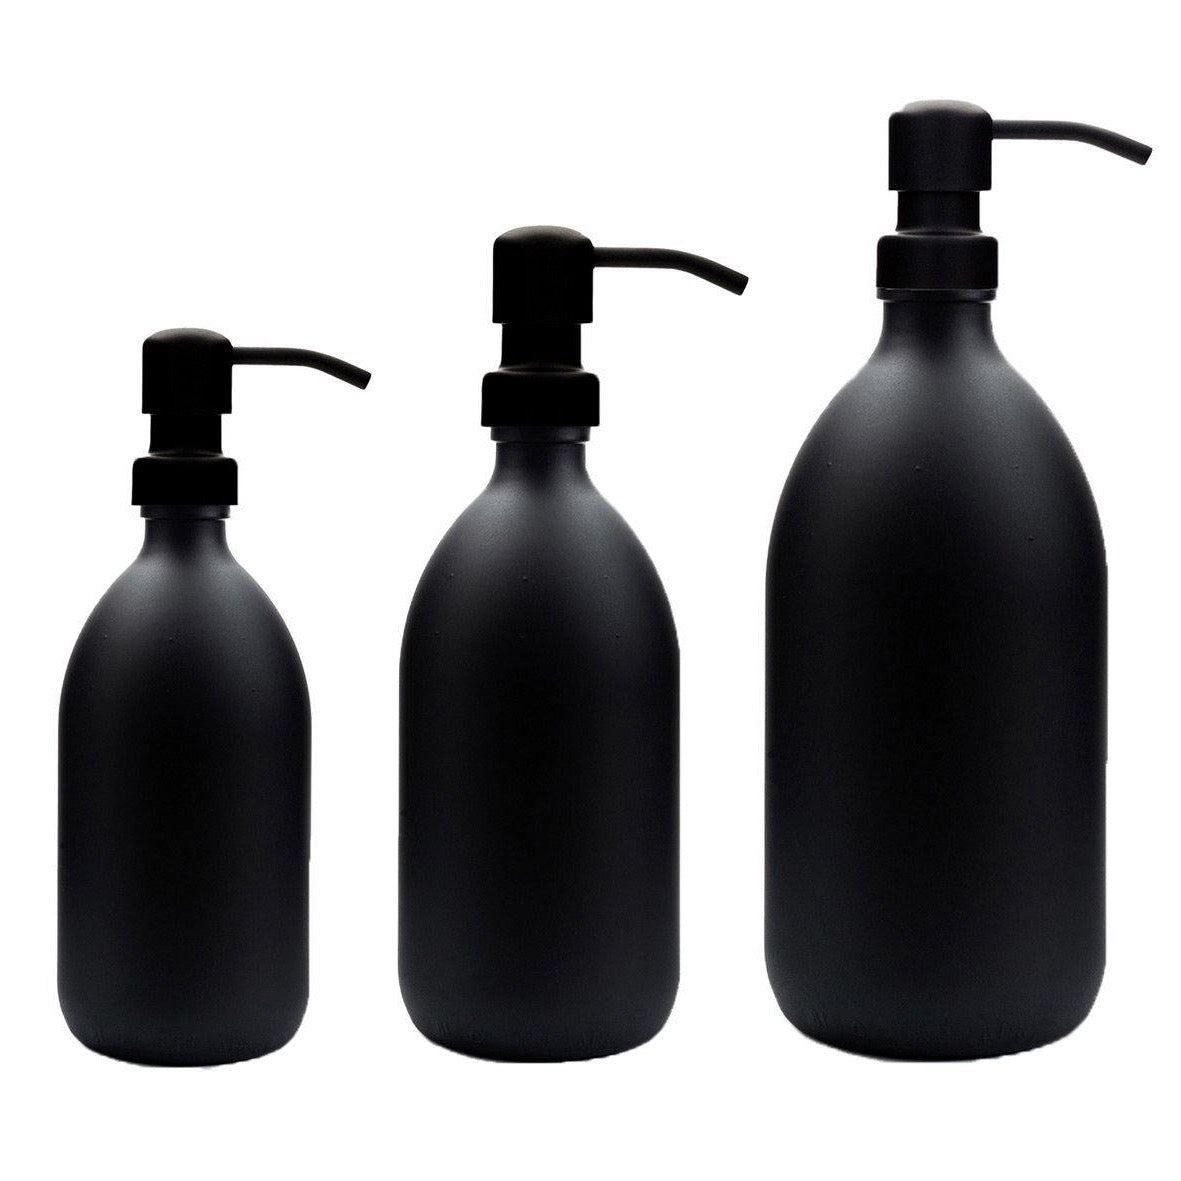 Kuishi Black Opaque Soap Dispenser Size Group